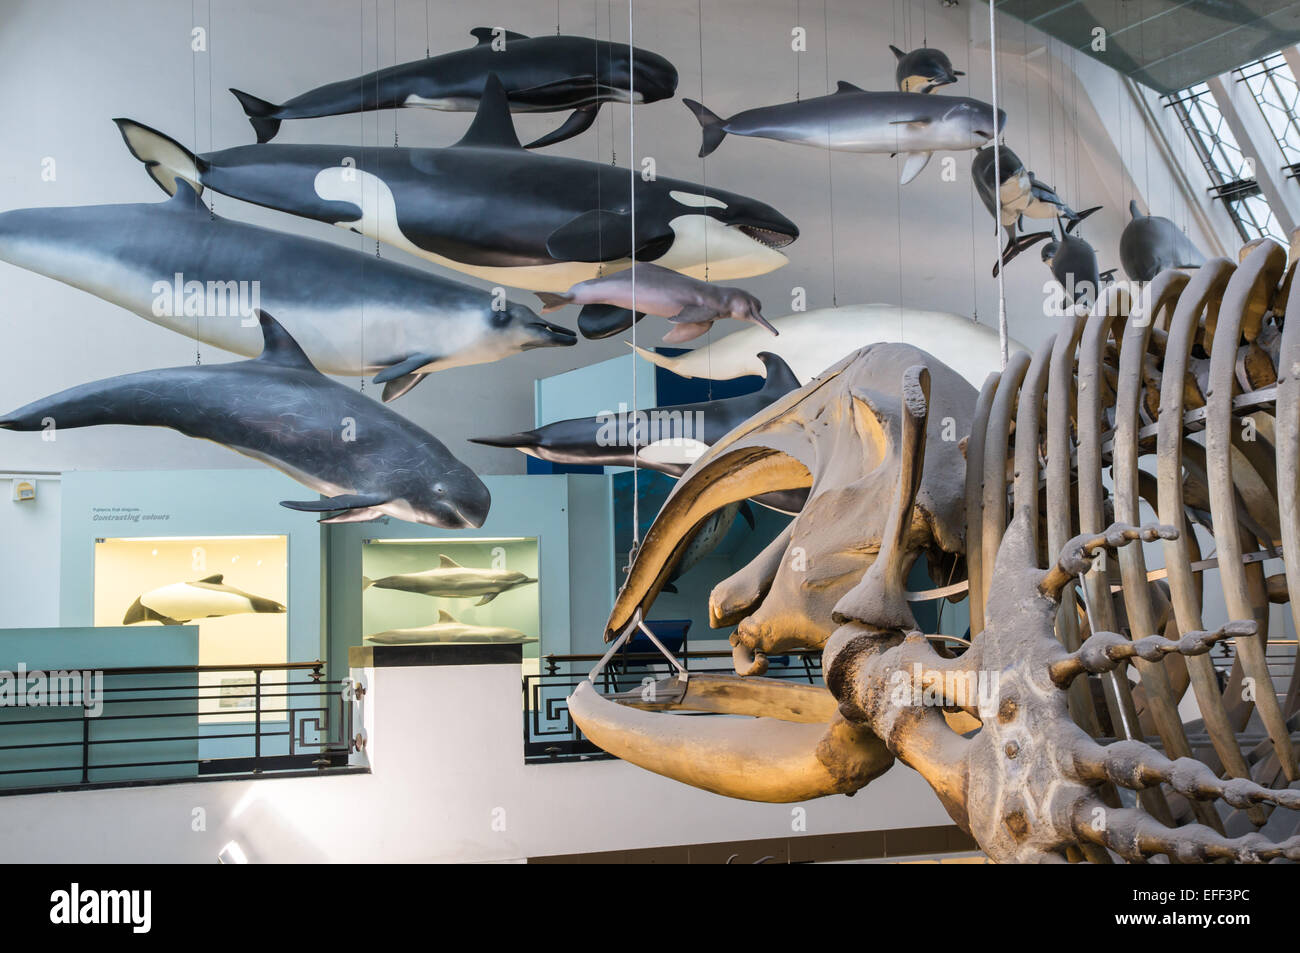 32 Live Whale Skeleton Images, Stock Photos, 3D objects, & Vectors